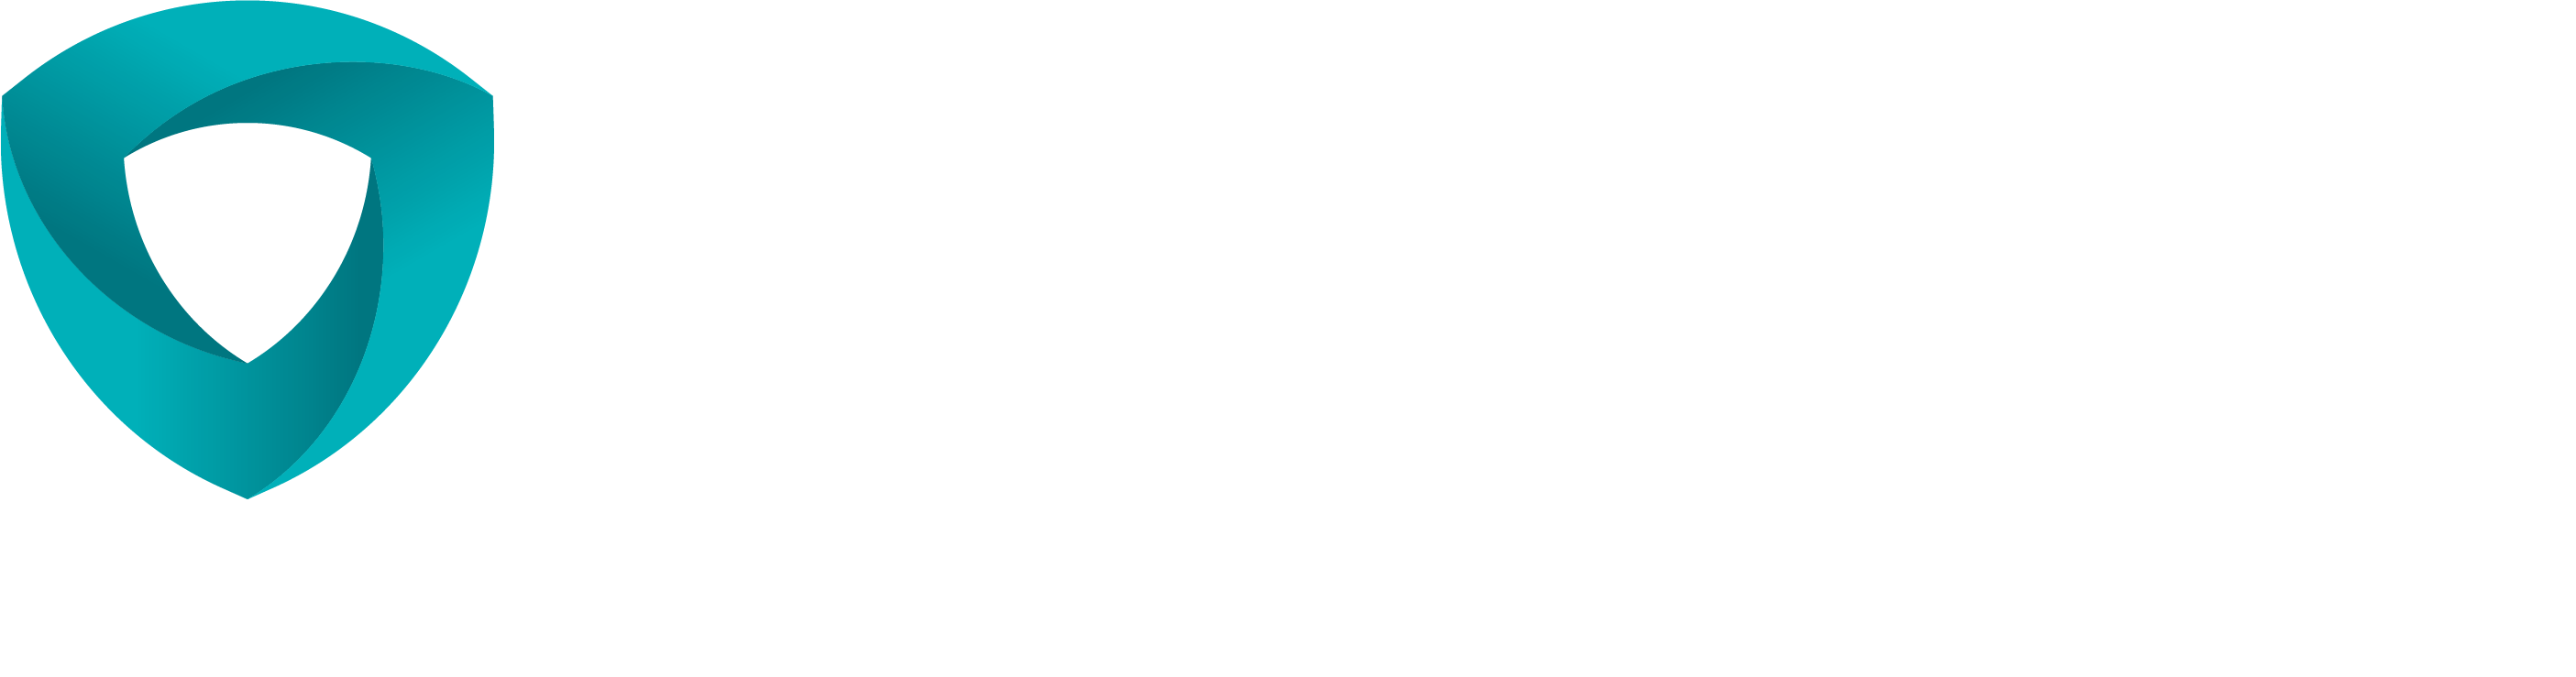 TrueRx logo